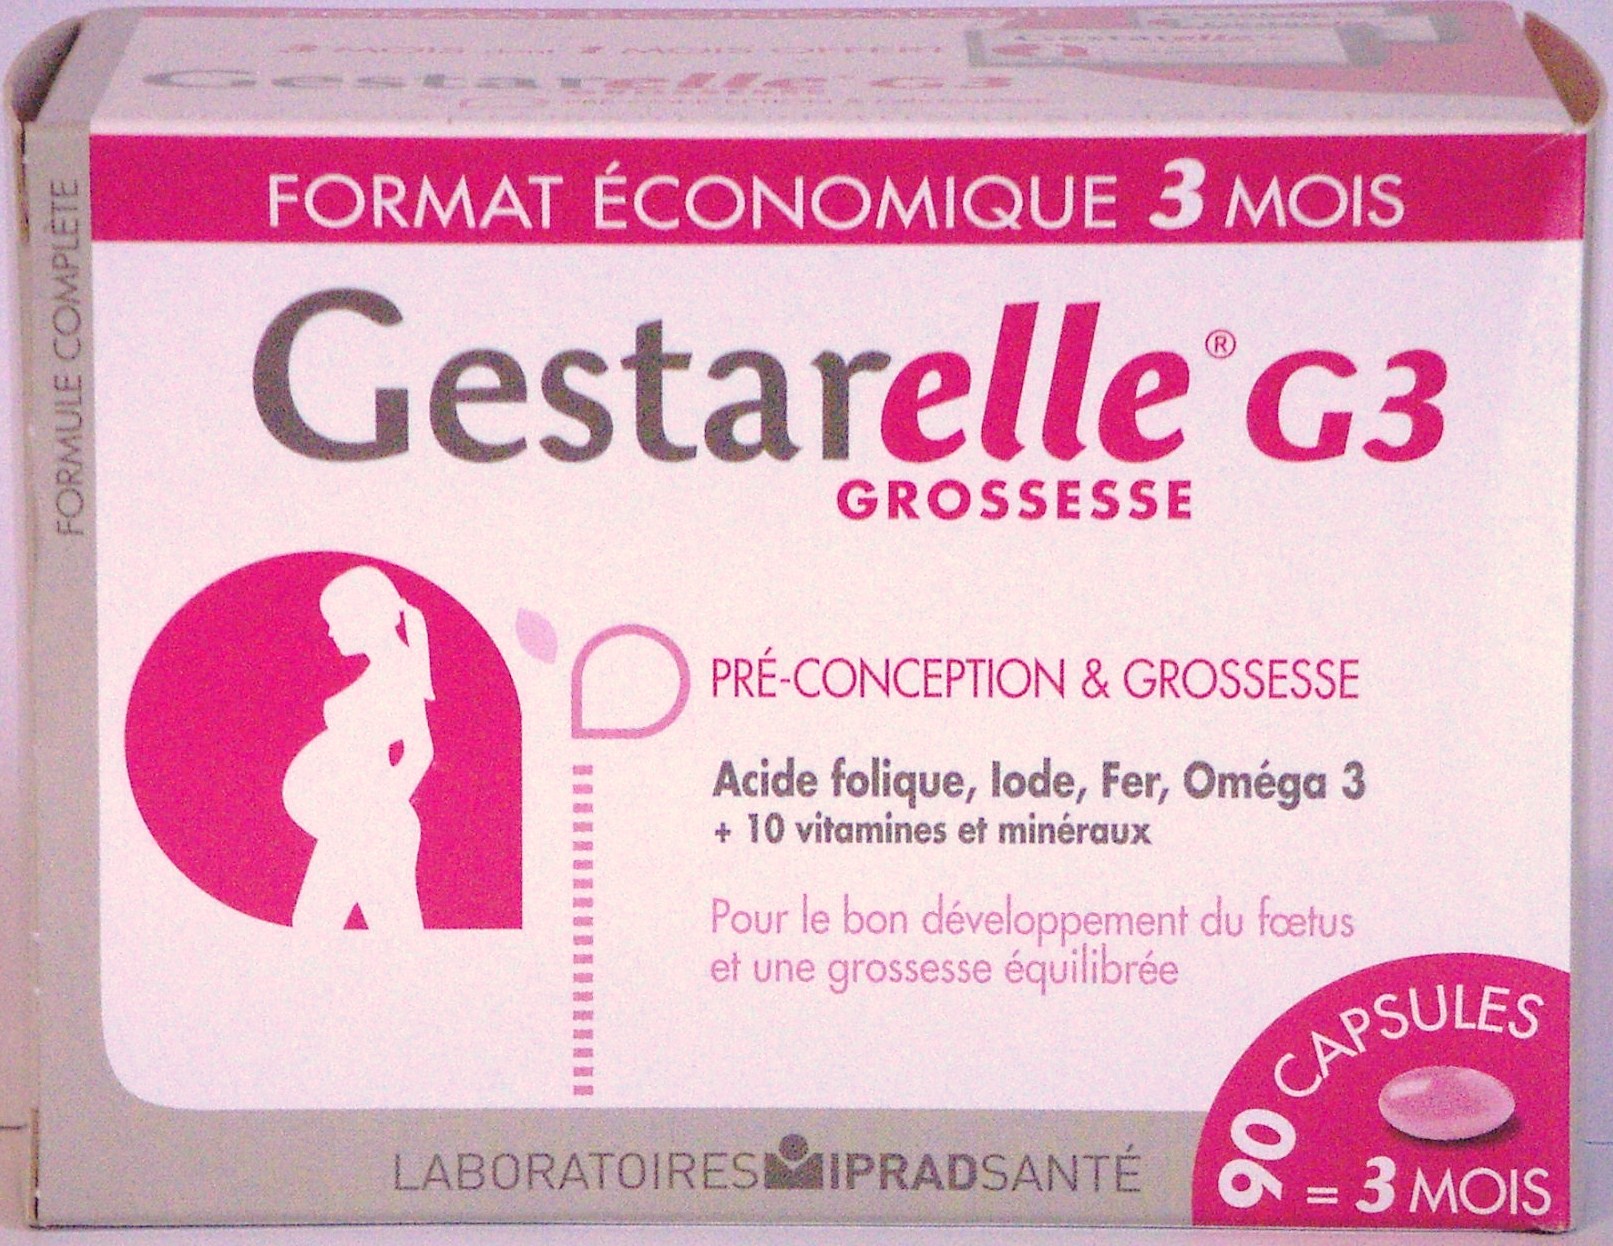 Gestarelle Gestarelle G3+ Preconception Grossesse Allaitement Boite D